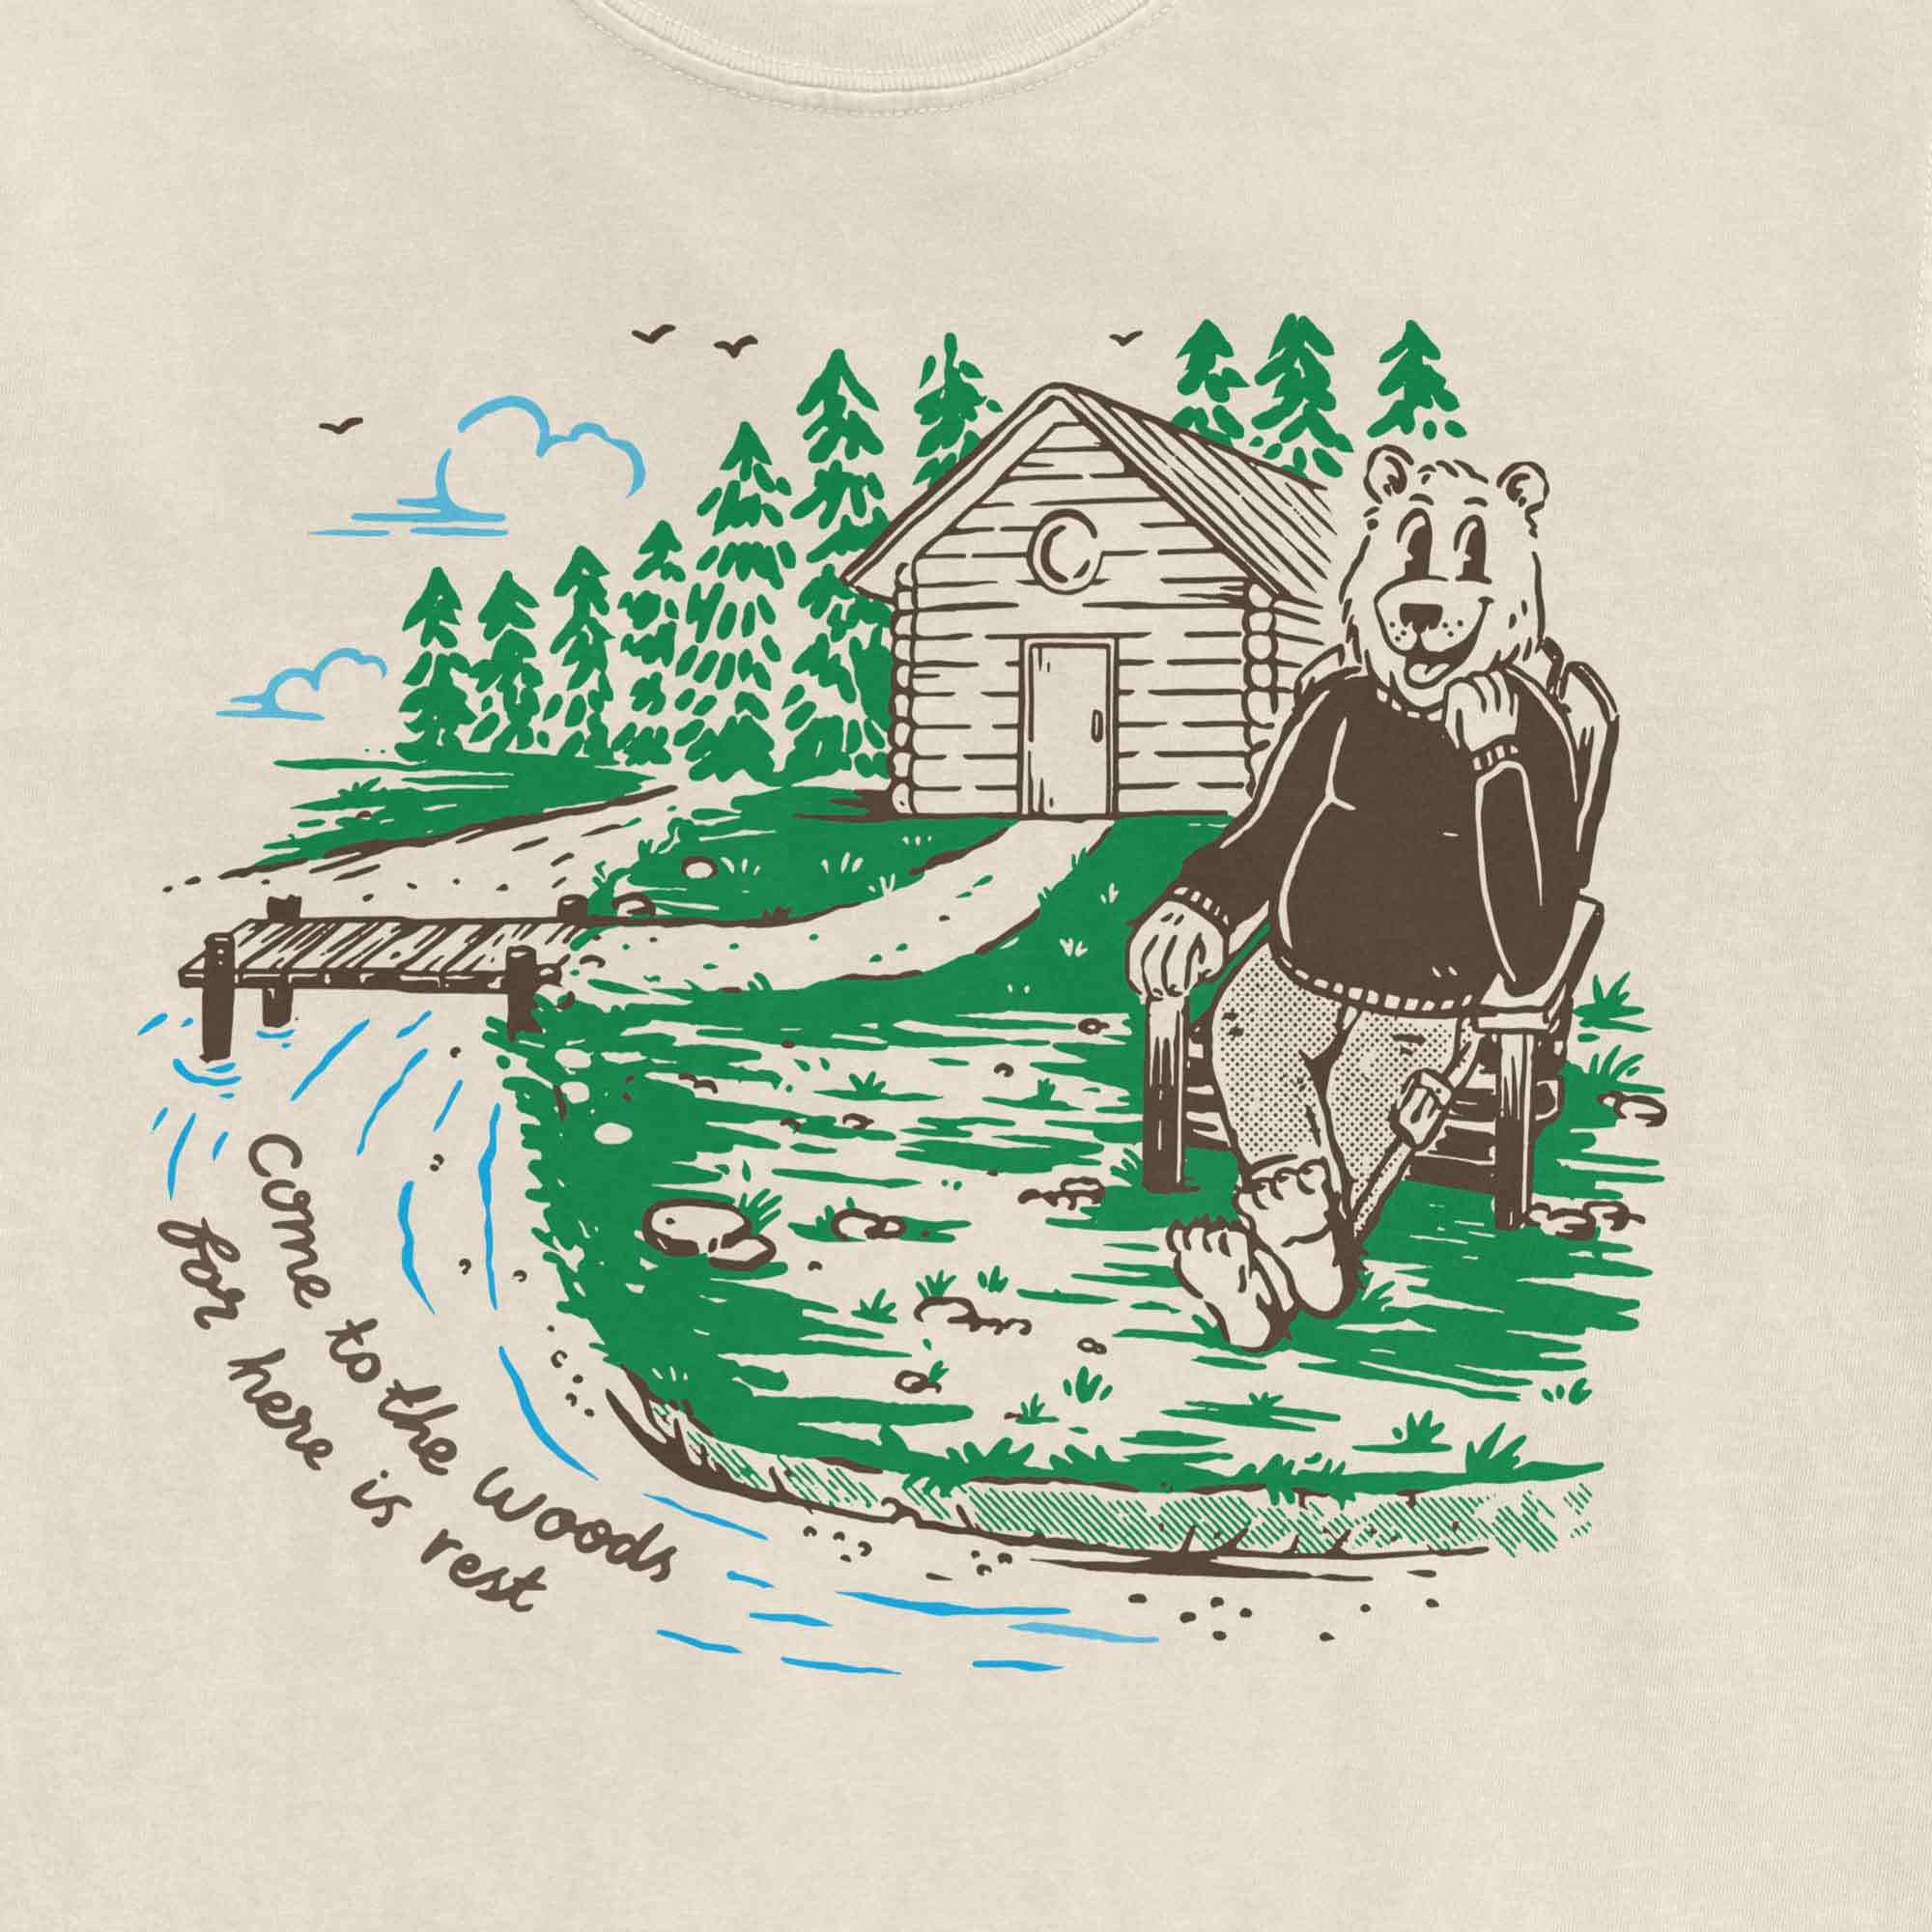 Funny Cute Cartoon Bear Hiding In Twilight Forest Outdoor | Kids T-Shirt